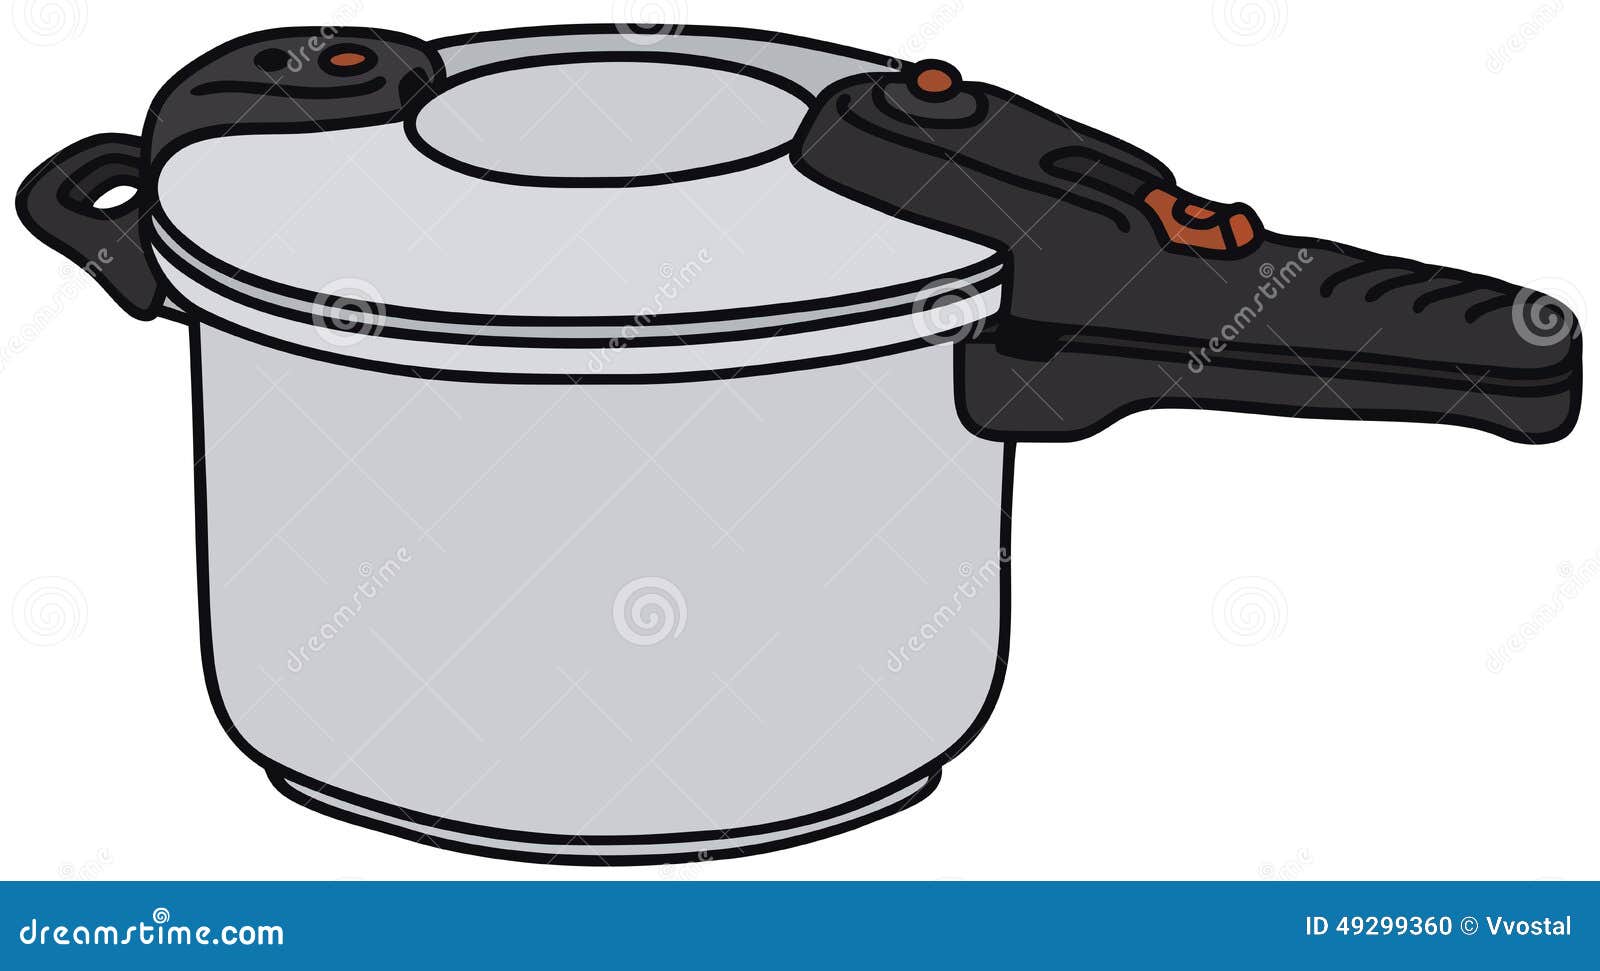 Pressure cooker stock vector. Illustration of vector - 49299360